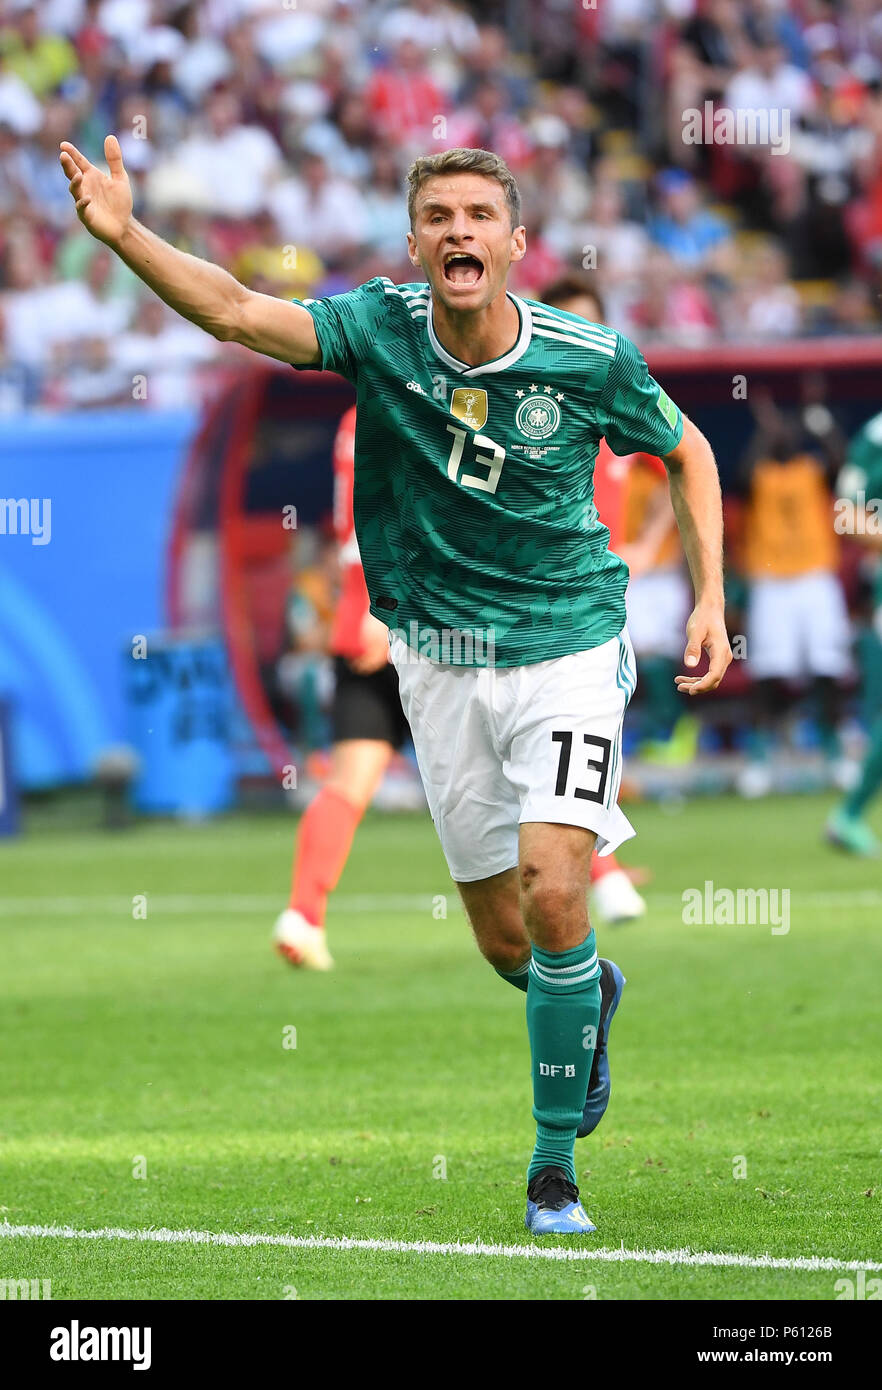 Kazan, Rusia. 27 de junio de 2018. Thomas Müller (Alemania), frustrados. GES/Fútbol/Copa Mundial 2018 Rusia: Alemania, Corea del Sur - 27.06.2018 Rusia: de Corea vs Alemania, Kazan Junio